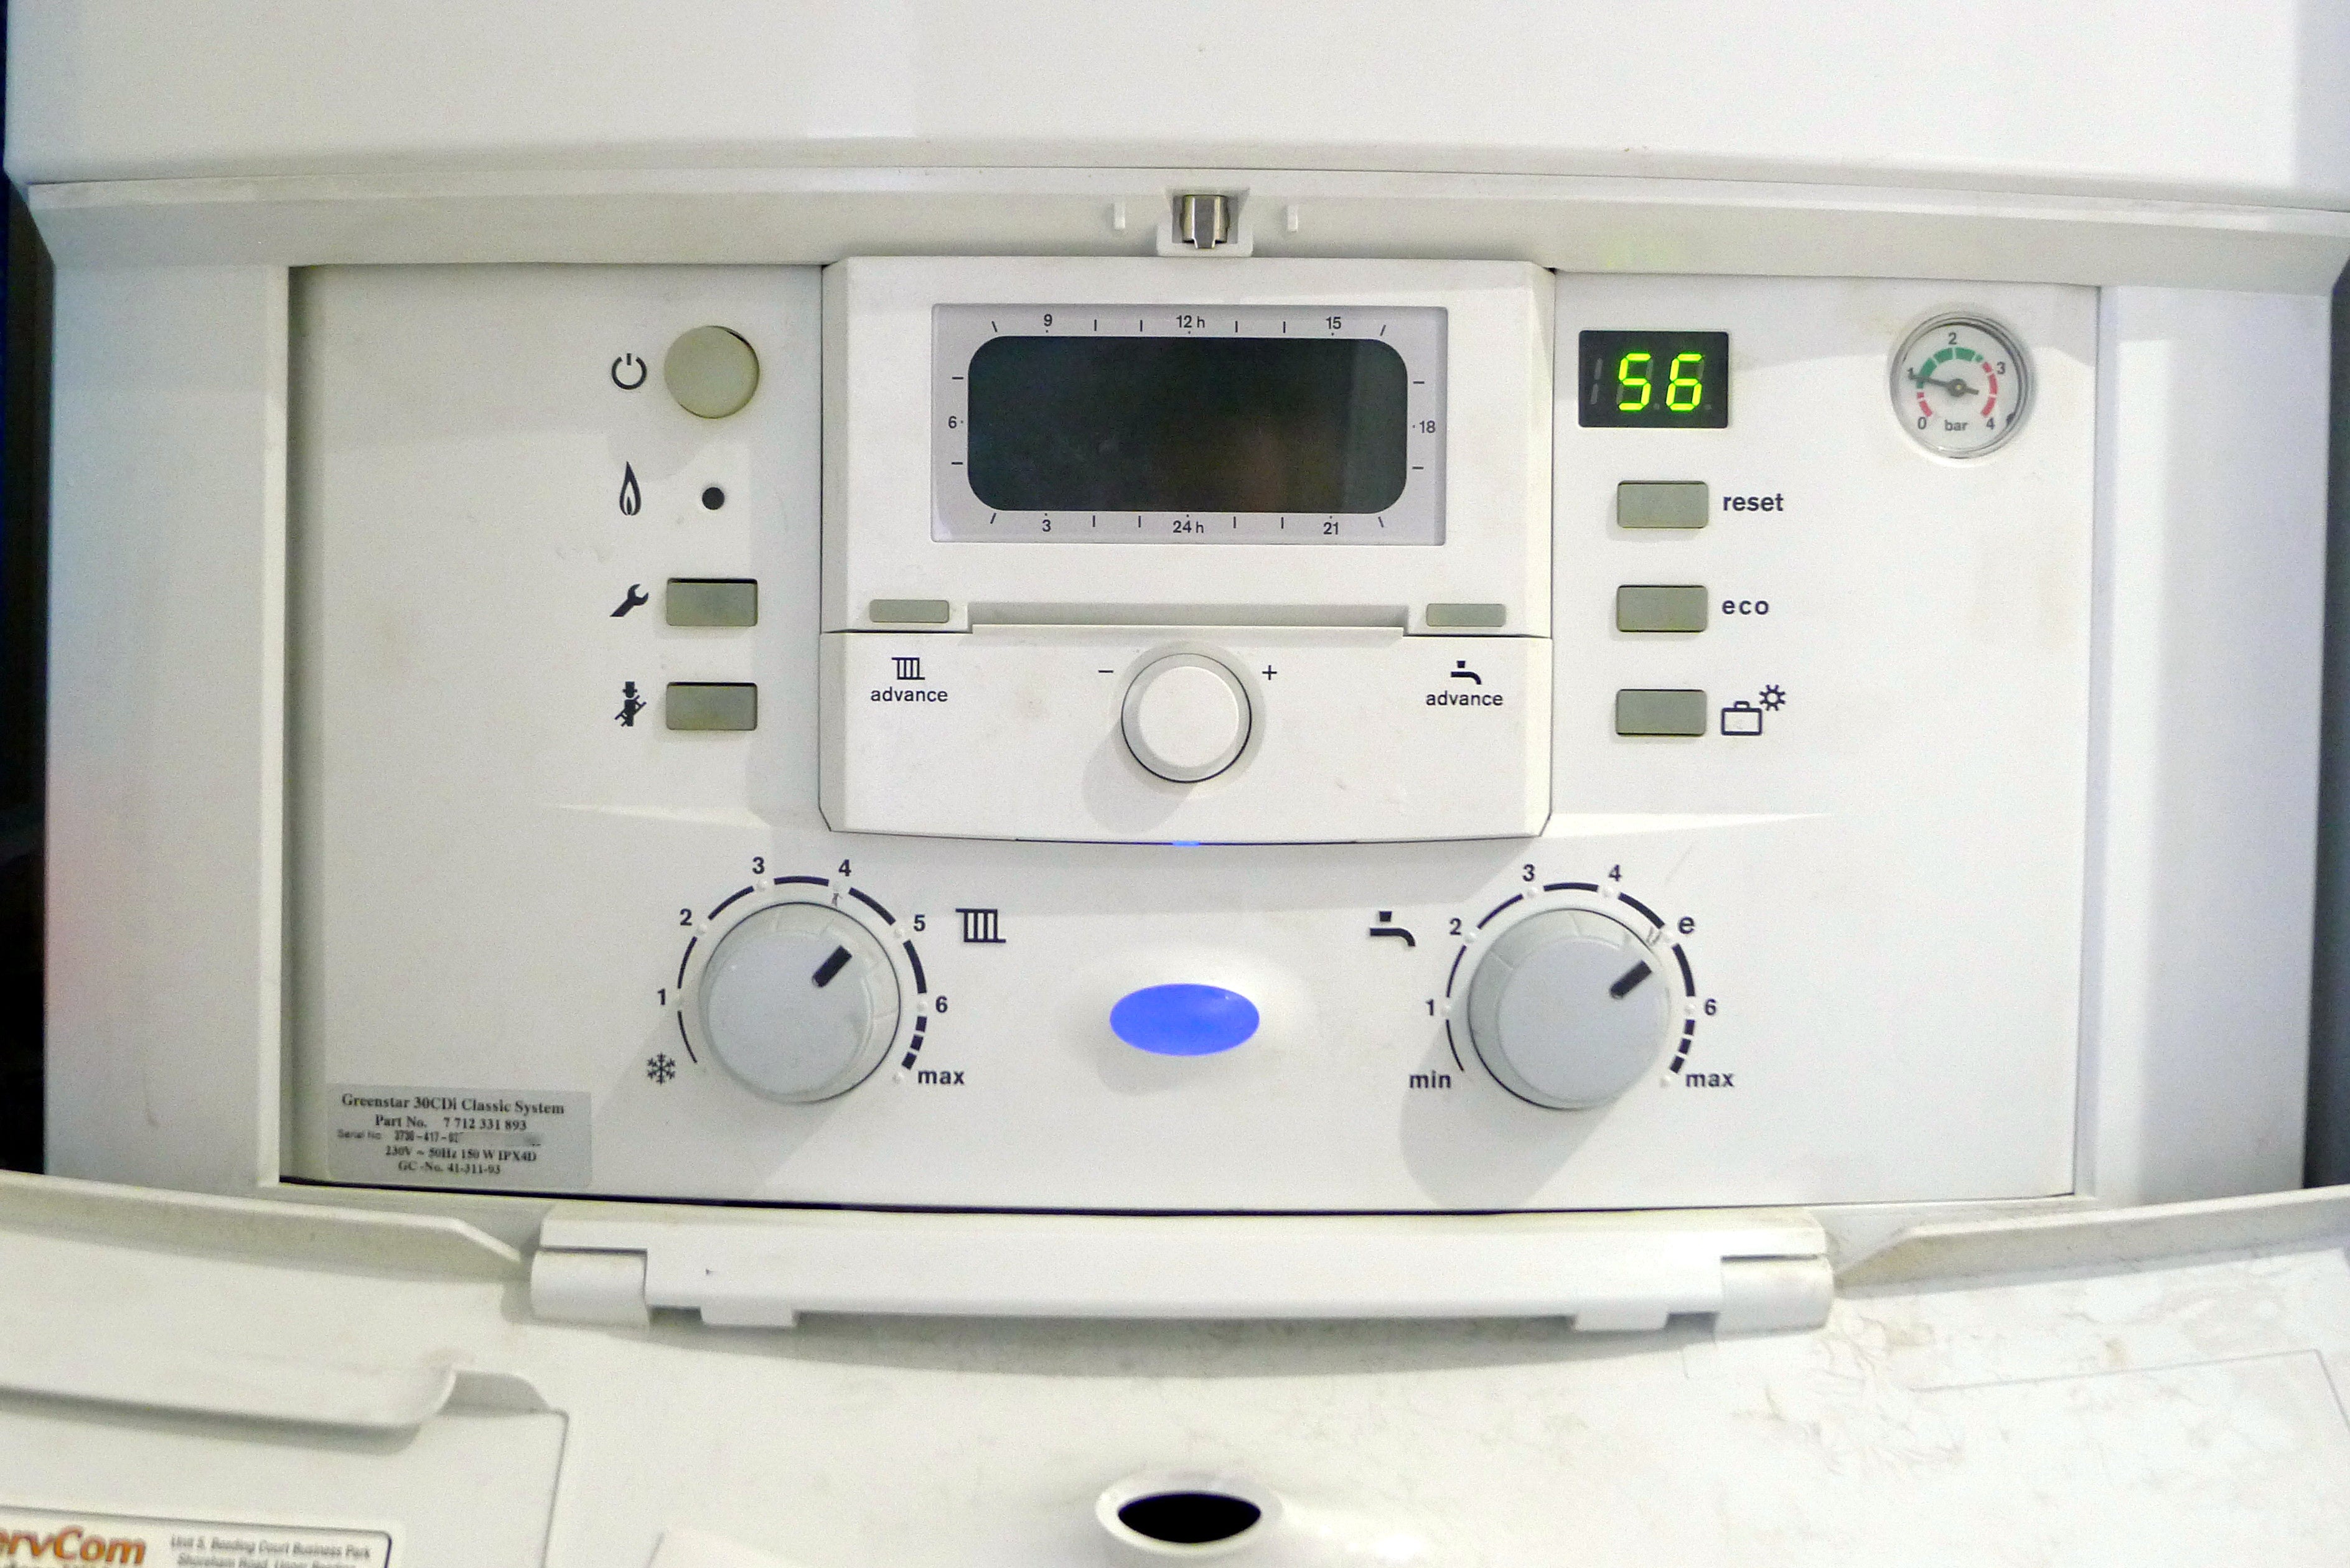 Hot Water Boiler Heater Thermostat Knob for POTTERTON BAXI PROFILE 60e 80 